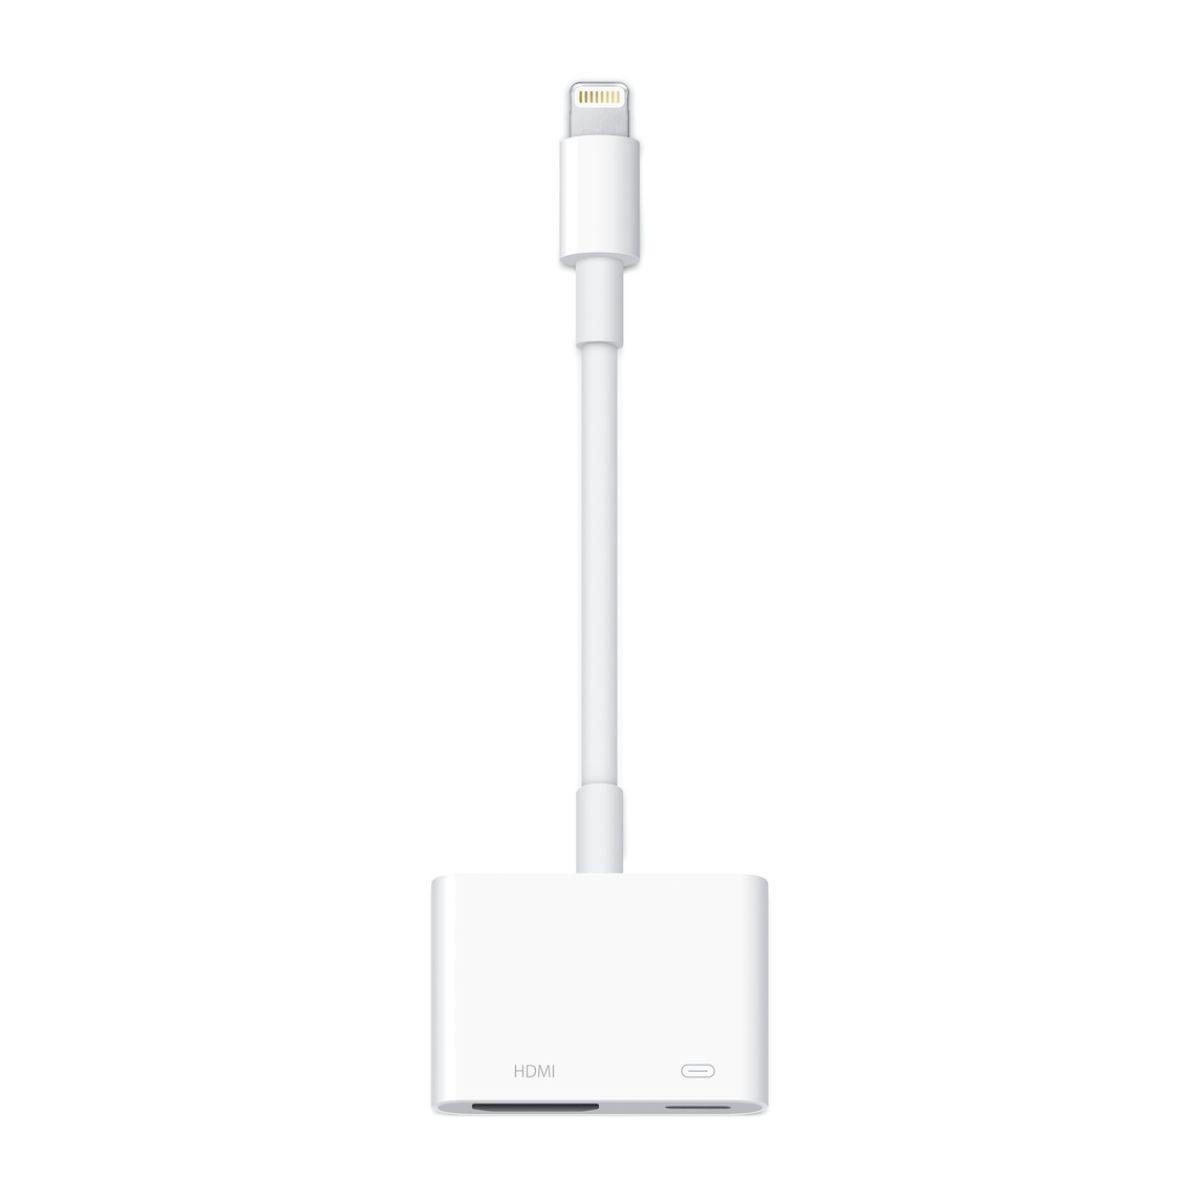 Apple A1438 Adaptateur Lightning AV numérique Blanc